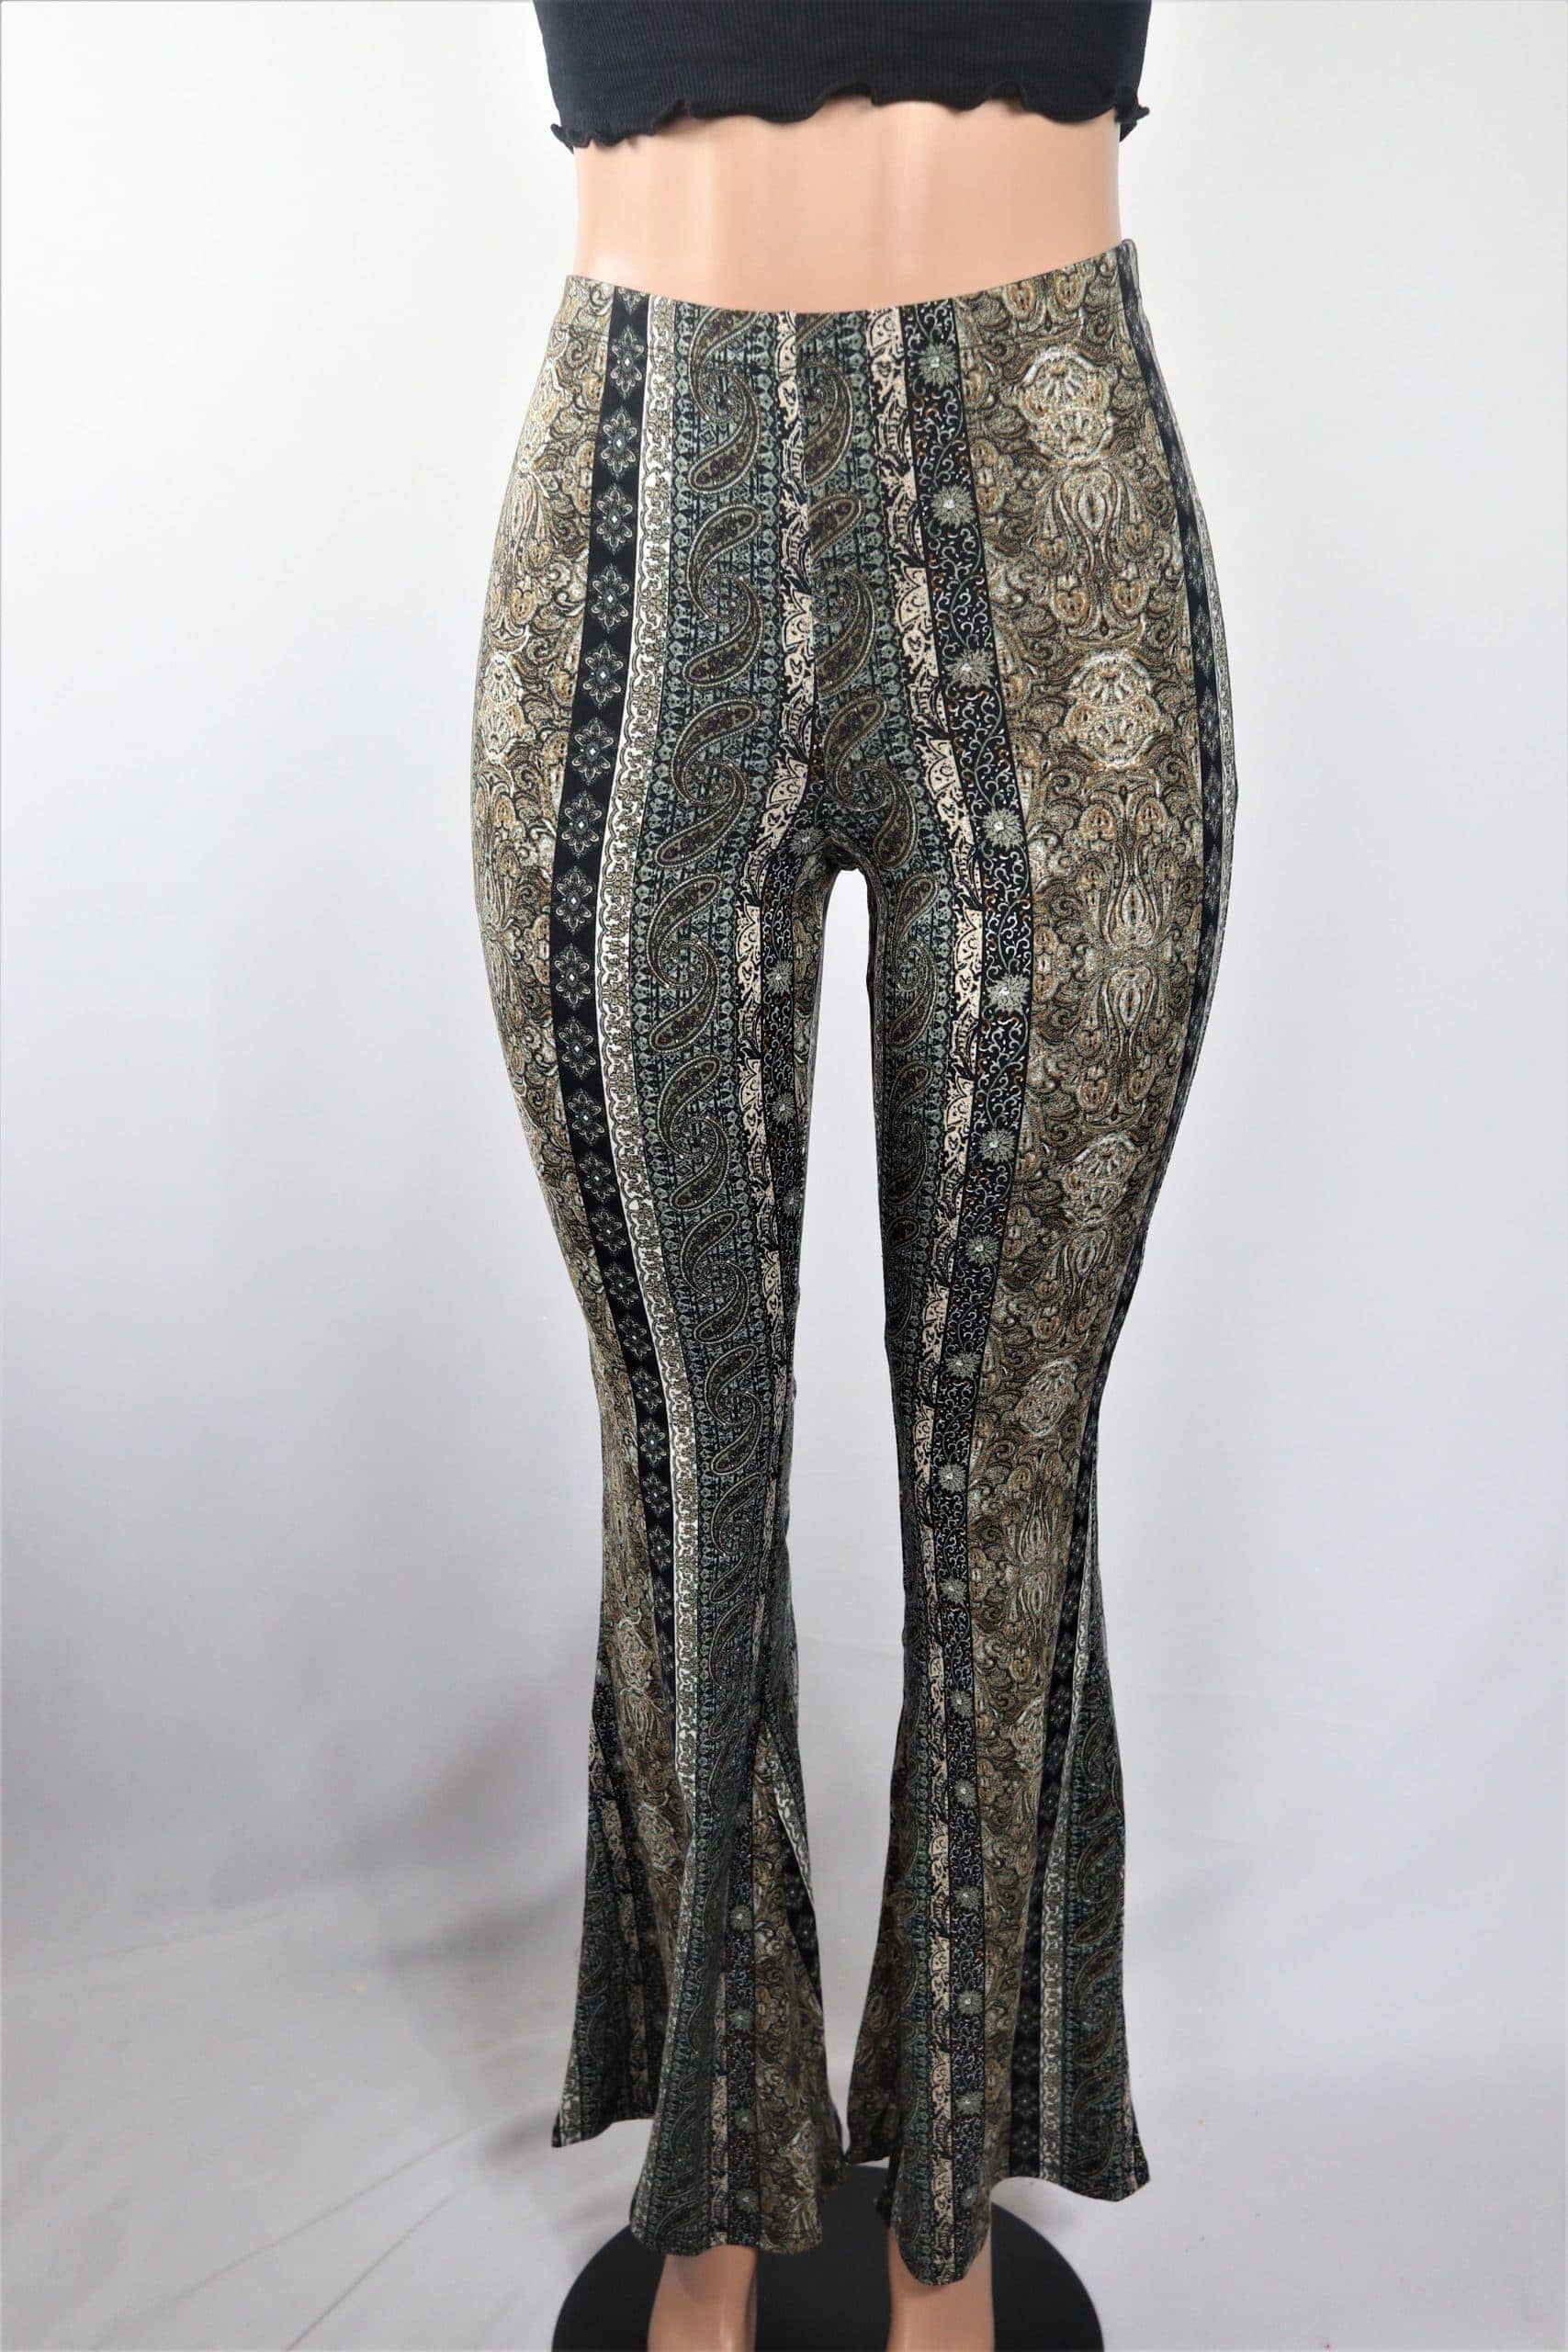 Santana Palazzo Pants - Printed fitted wide leg high waisted flare pants.